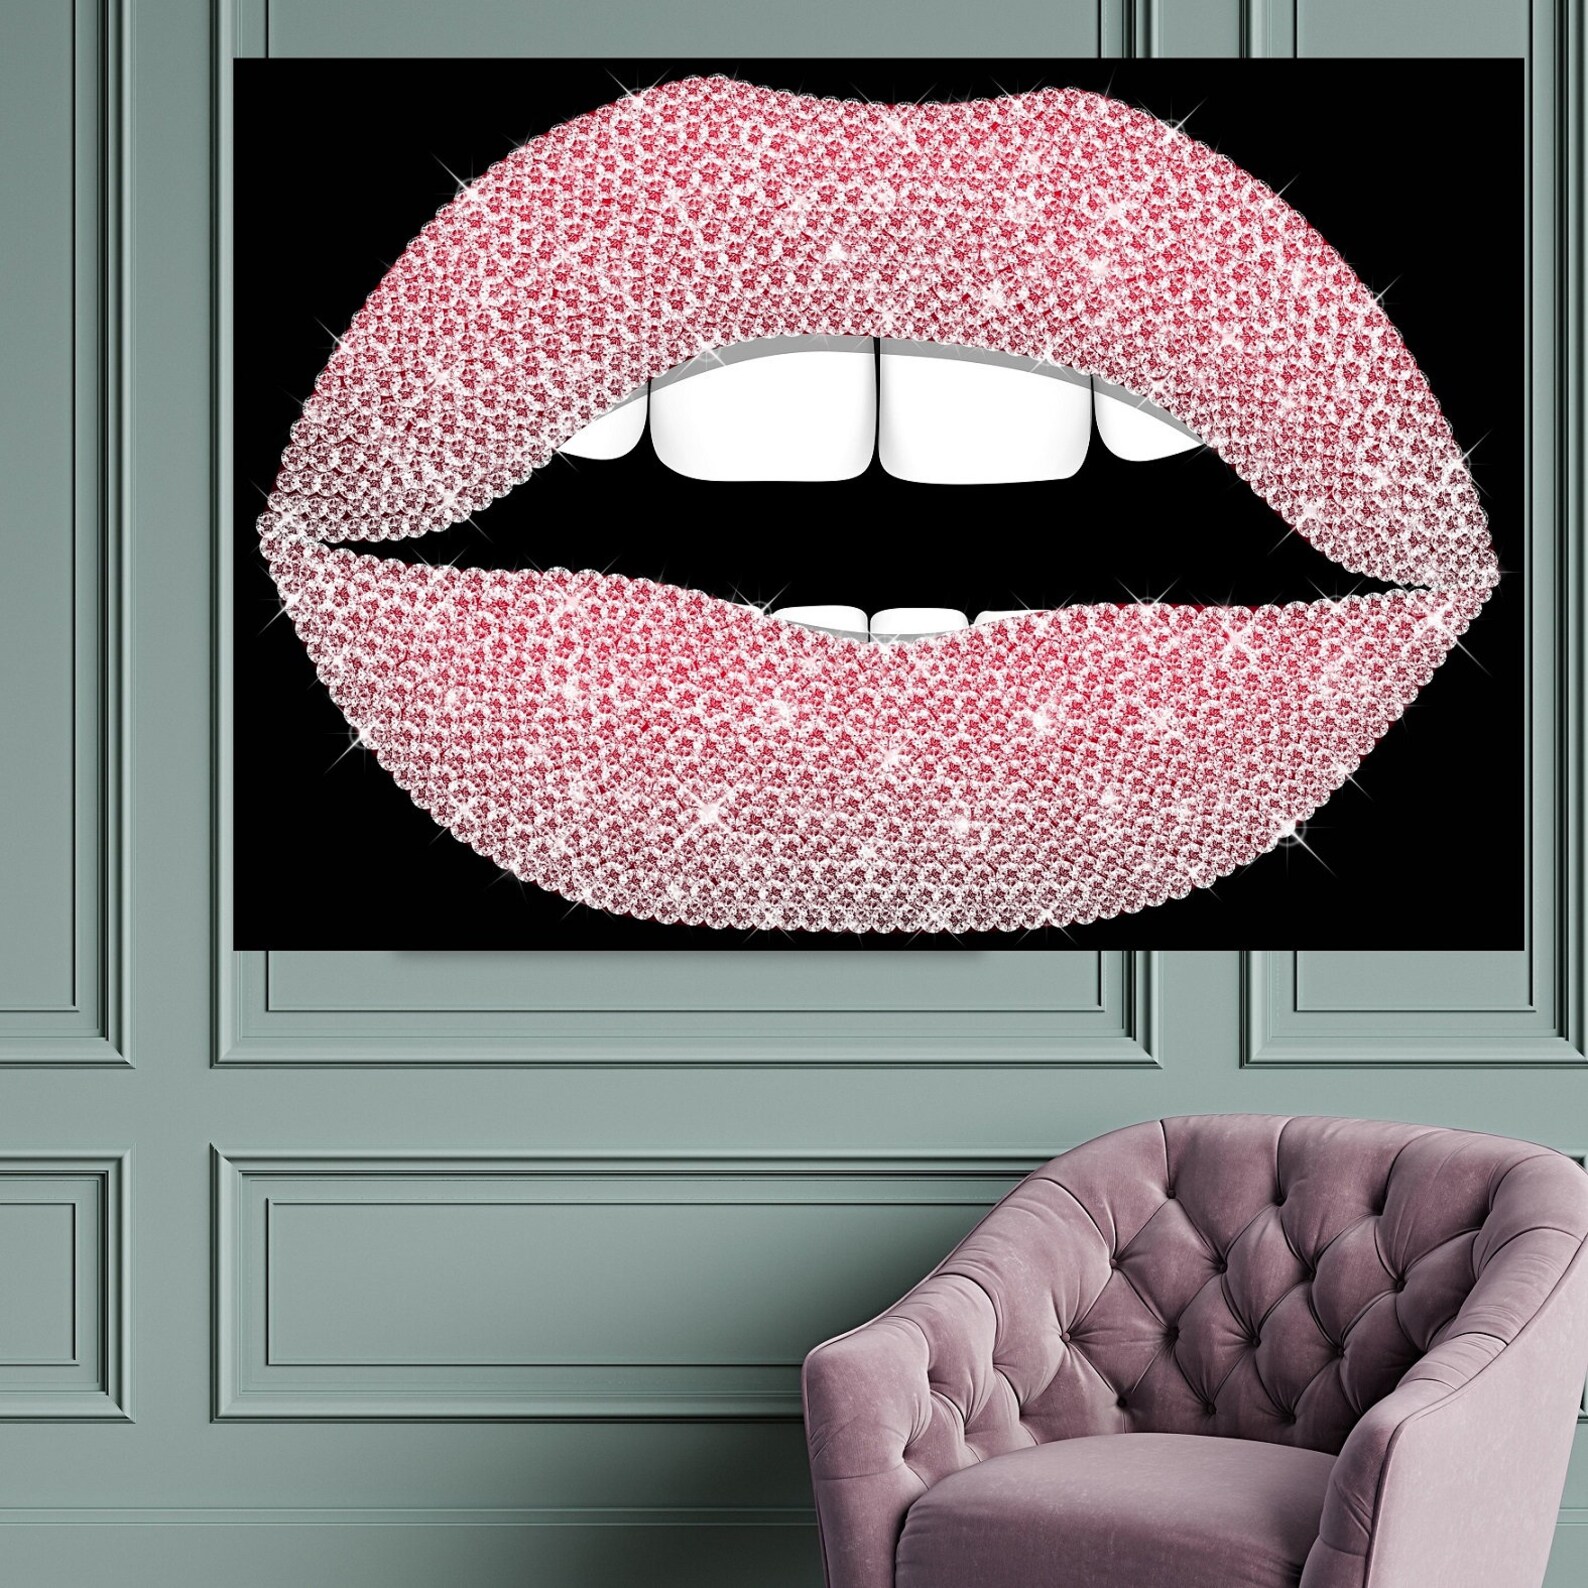 Diamond Art / Diamond Lips / Poster Print / Wall Art / Fashion | Etsy